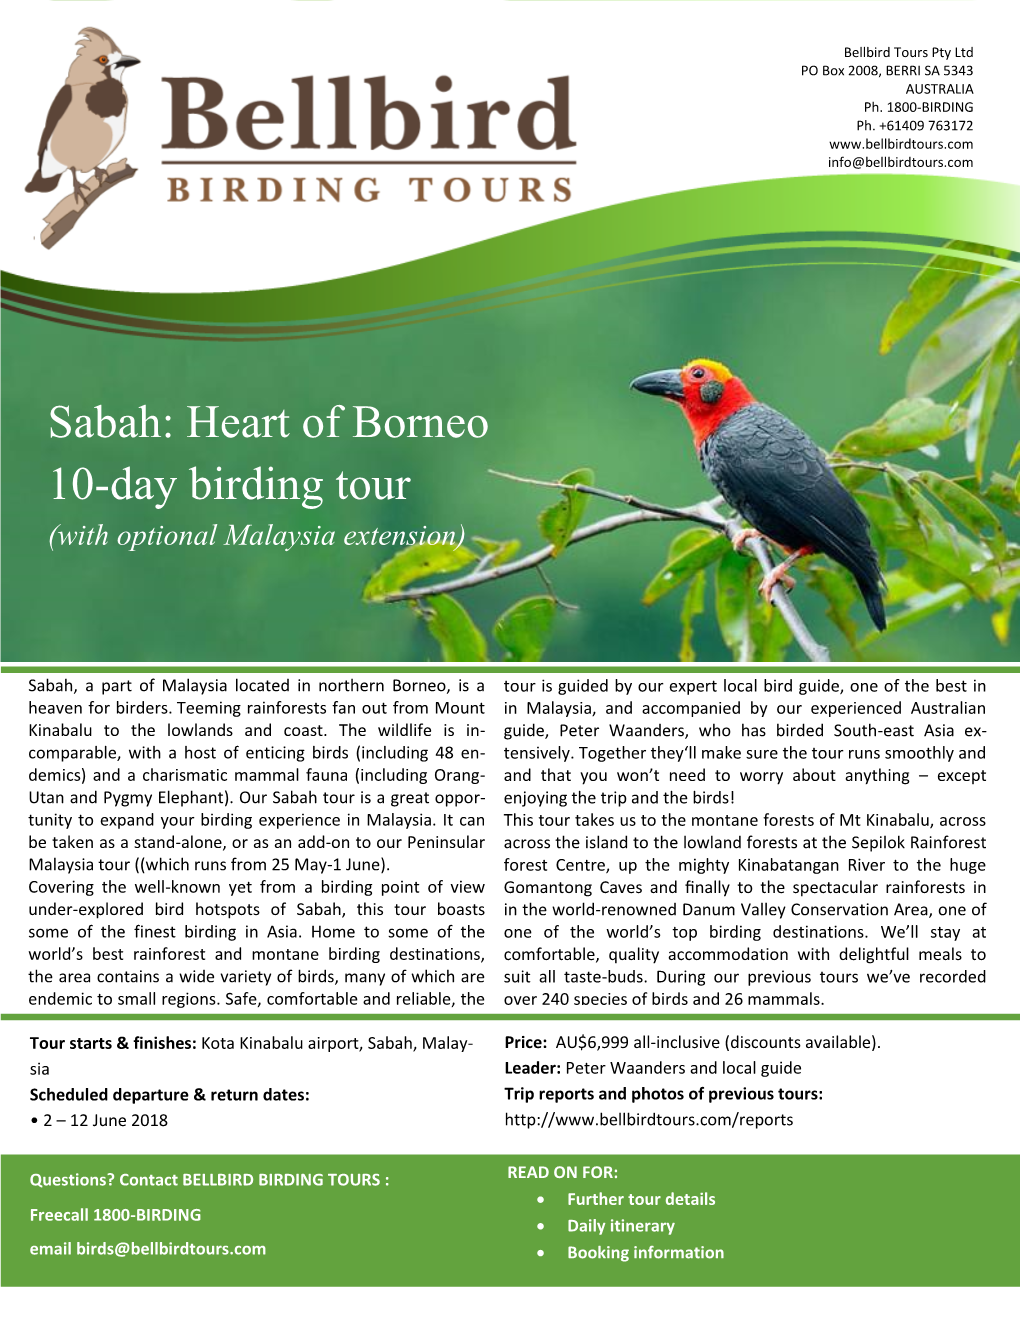 Sabah: Heart of Borneo 10-Day Birding Tour